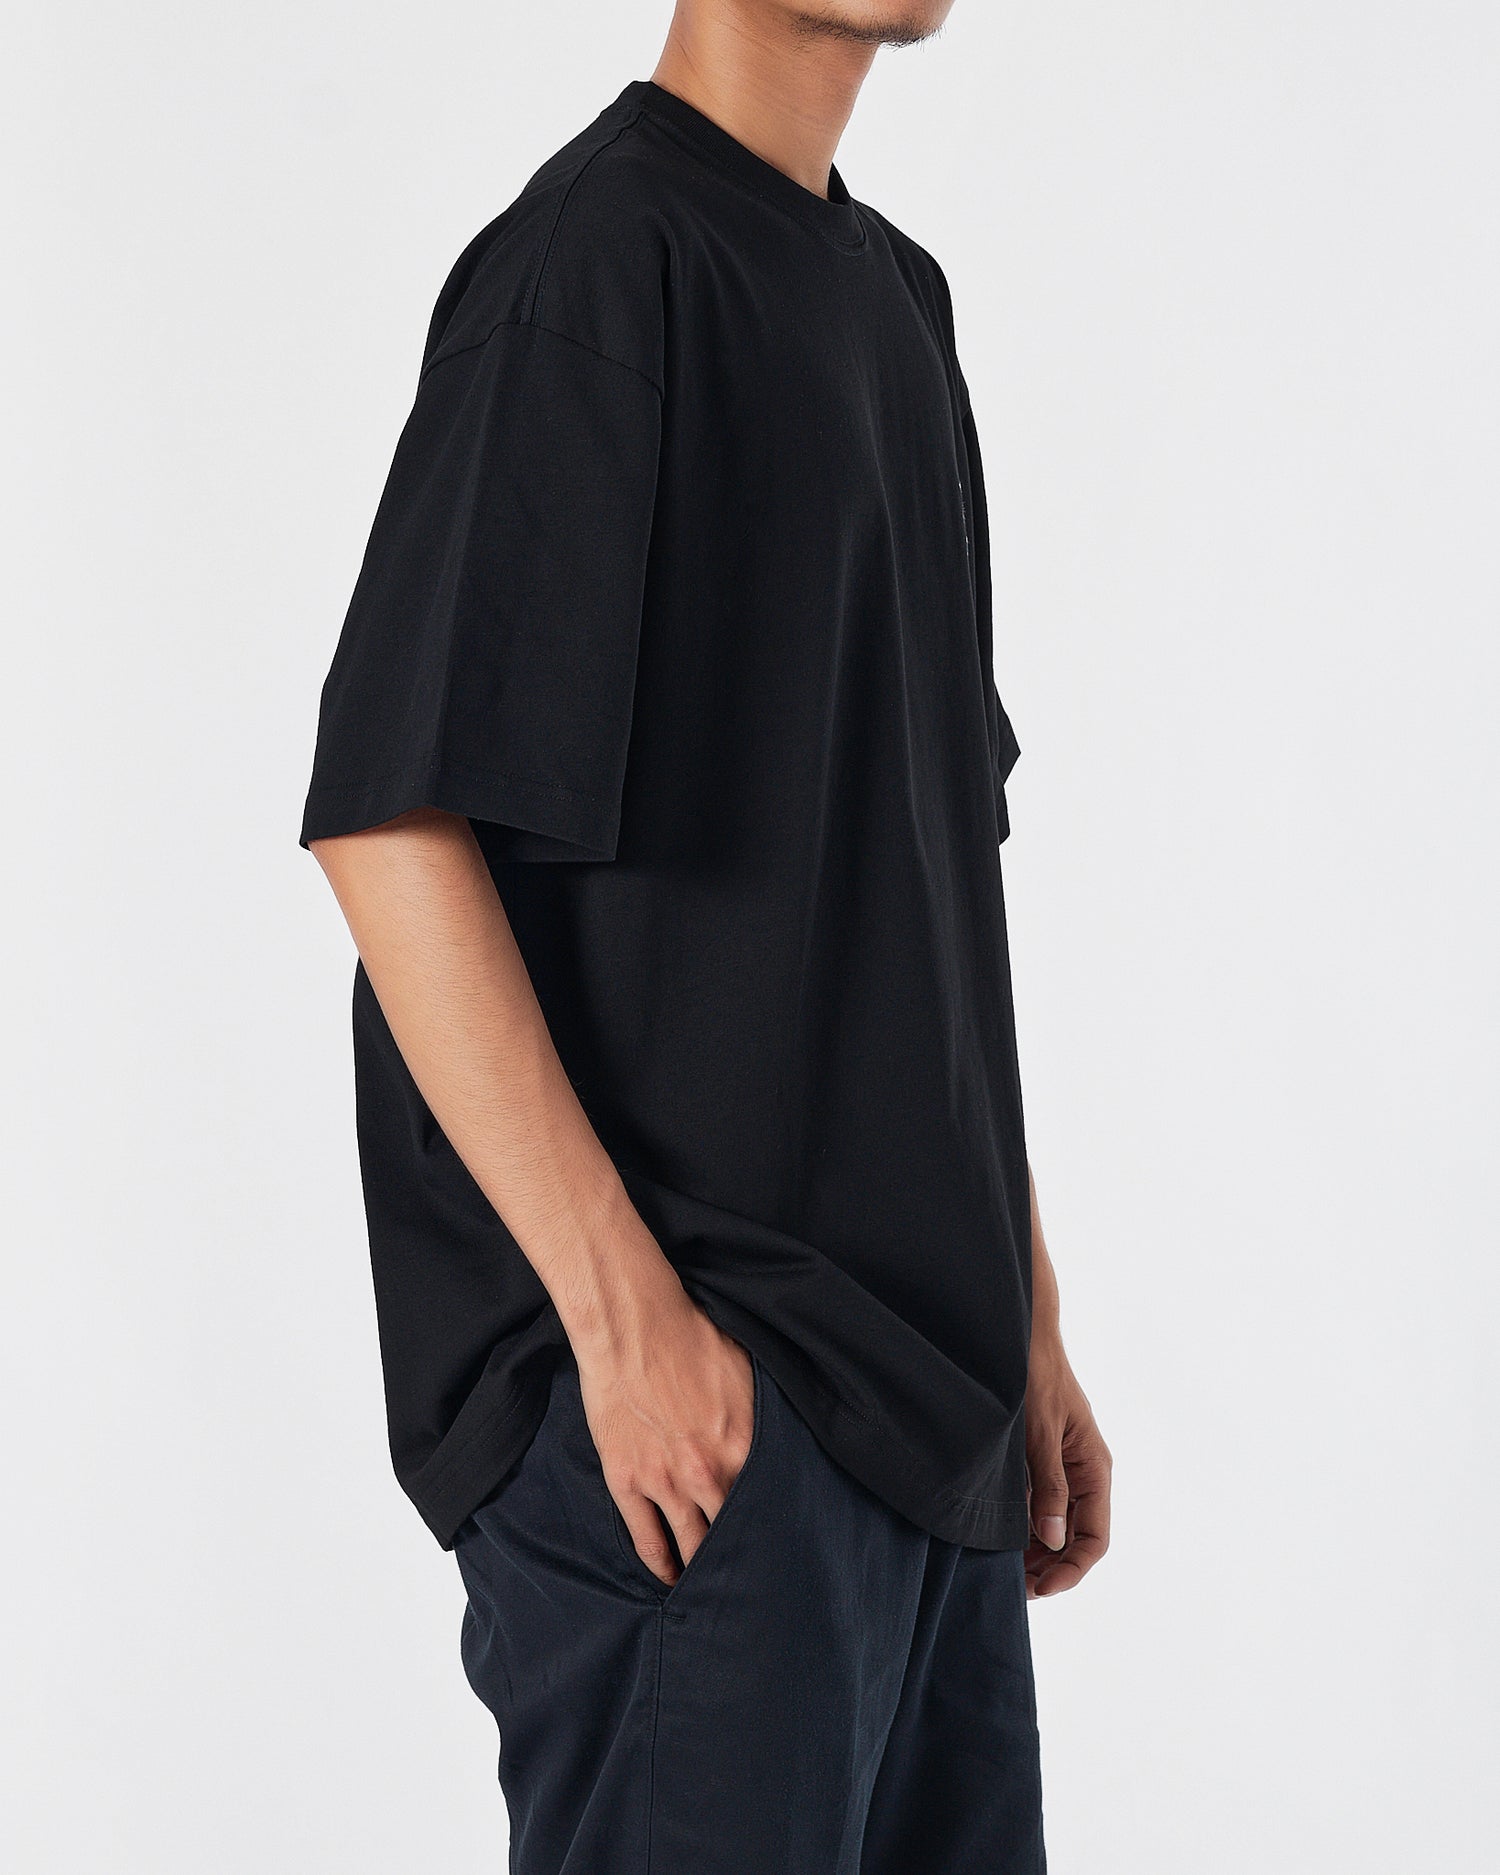 KEN Flower Embroidered Men Black T-Shirt 17.90